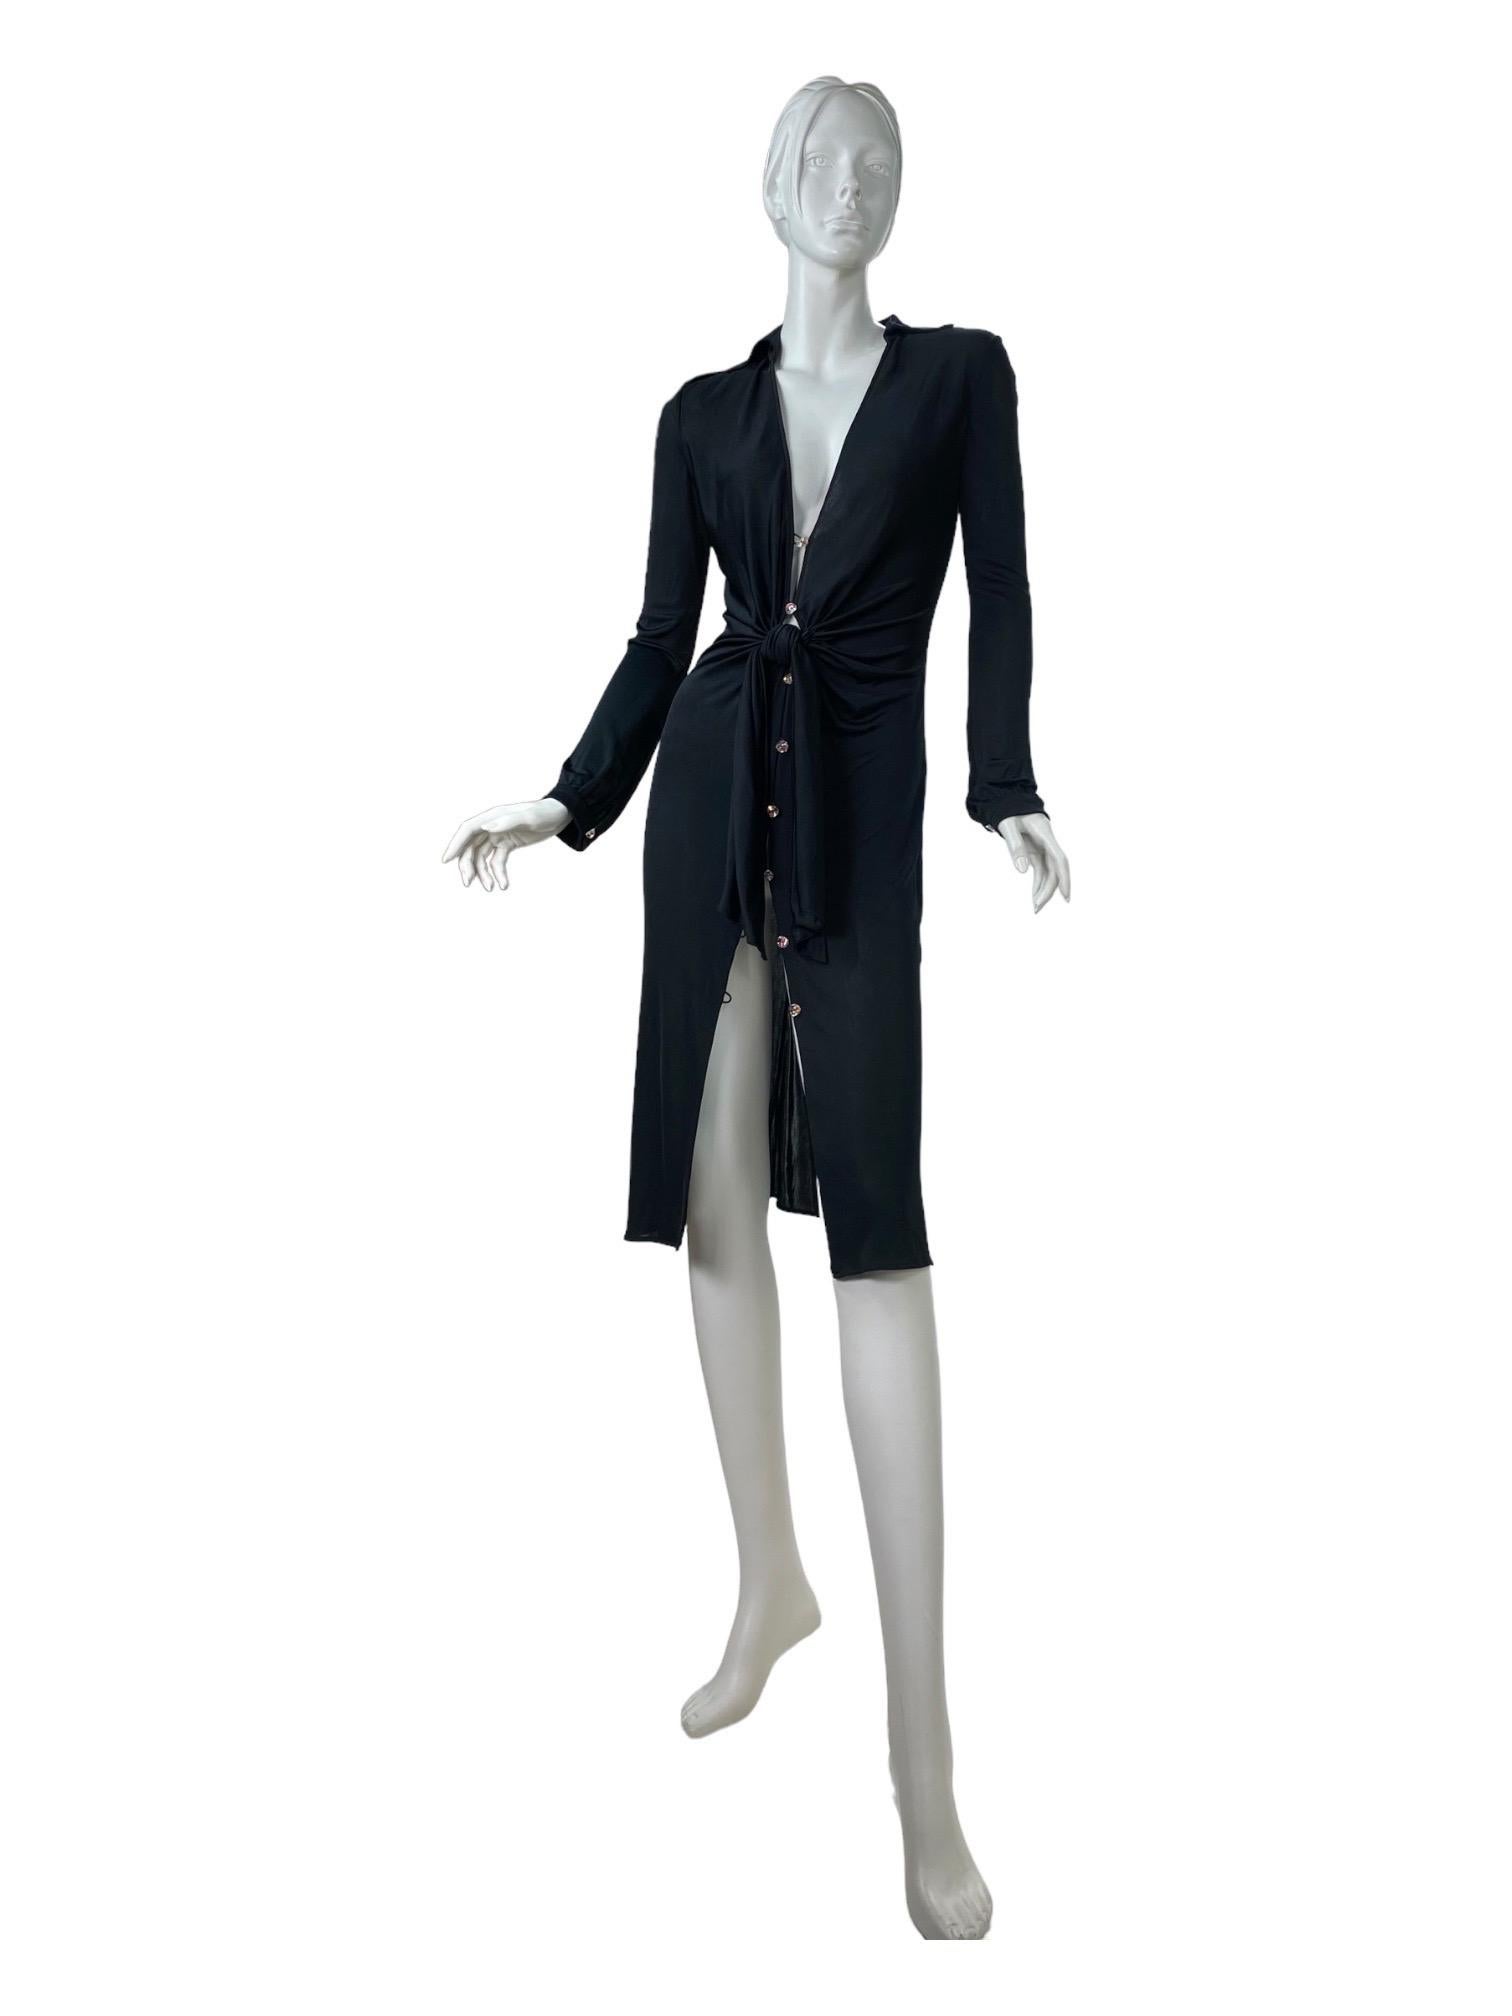 S/S 2000 Vintage Gianni Versace Couture Runway Black Deep V-Neck Dress For Sale 1